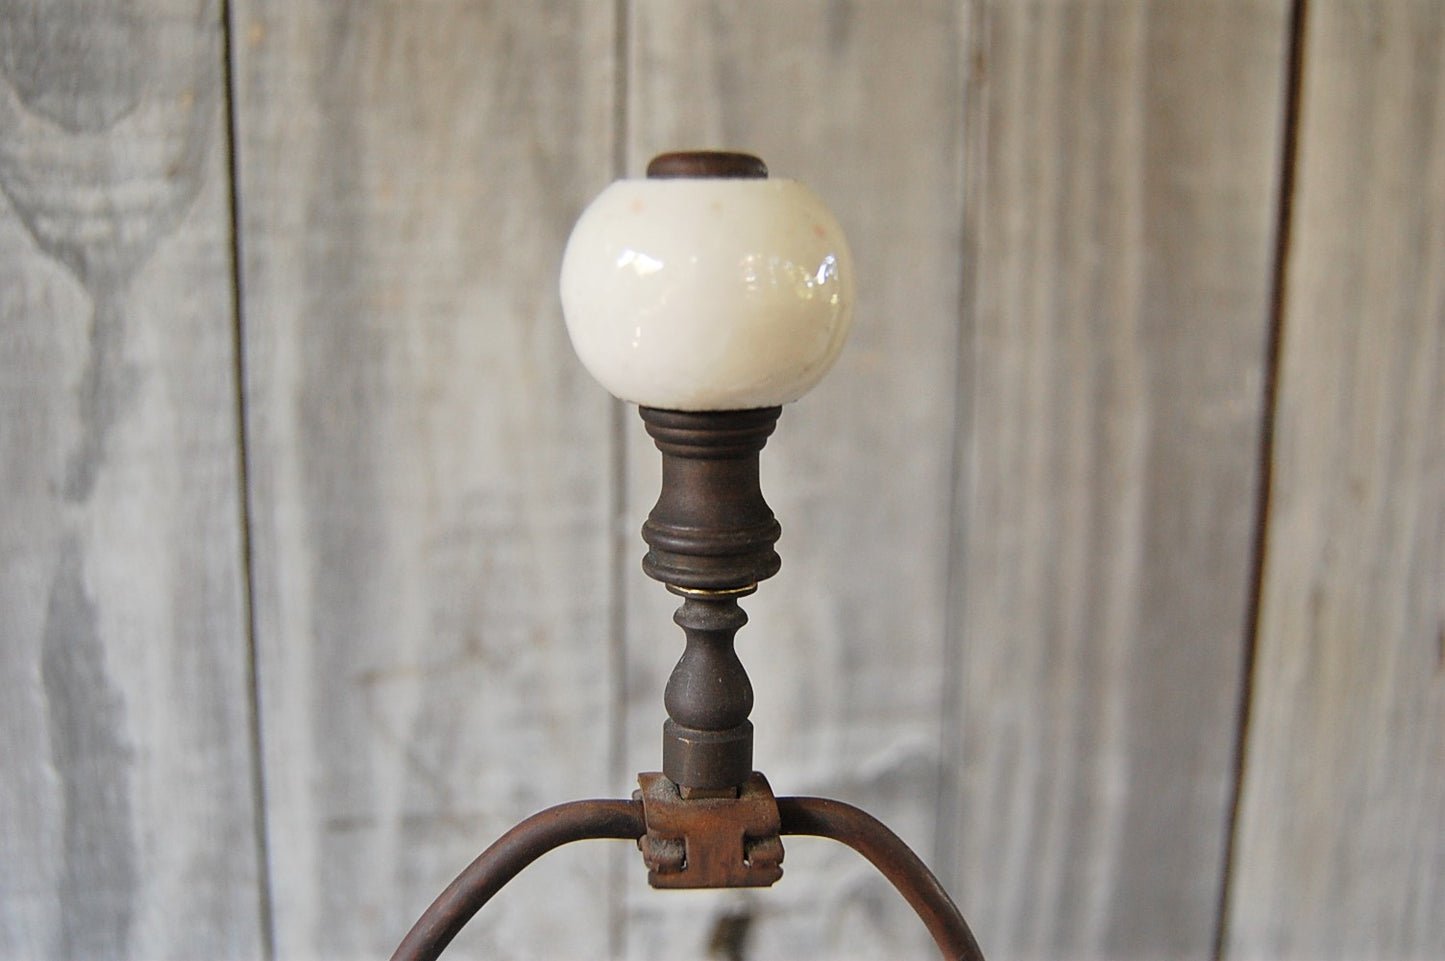 Chinoiserie lamp set